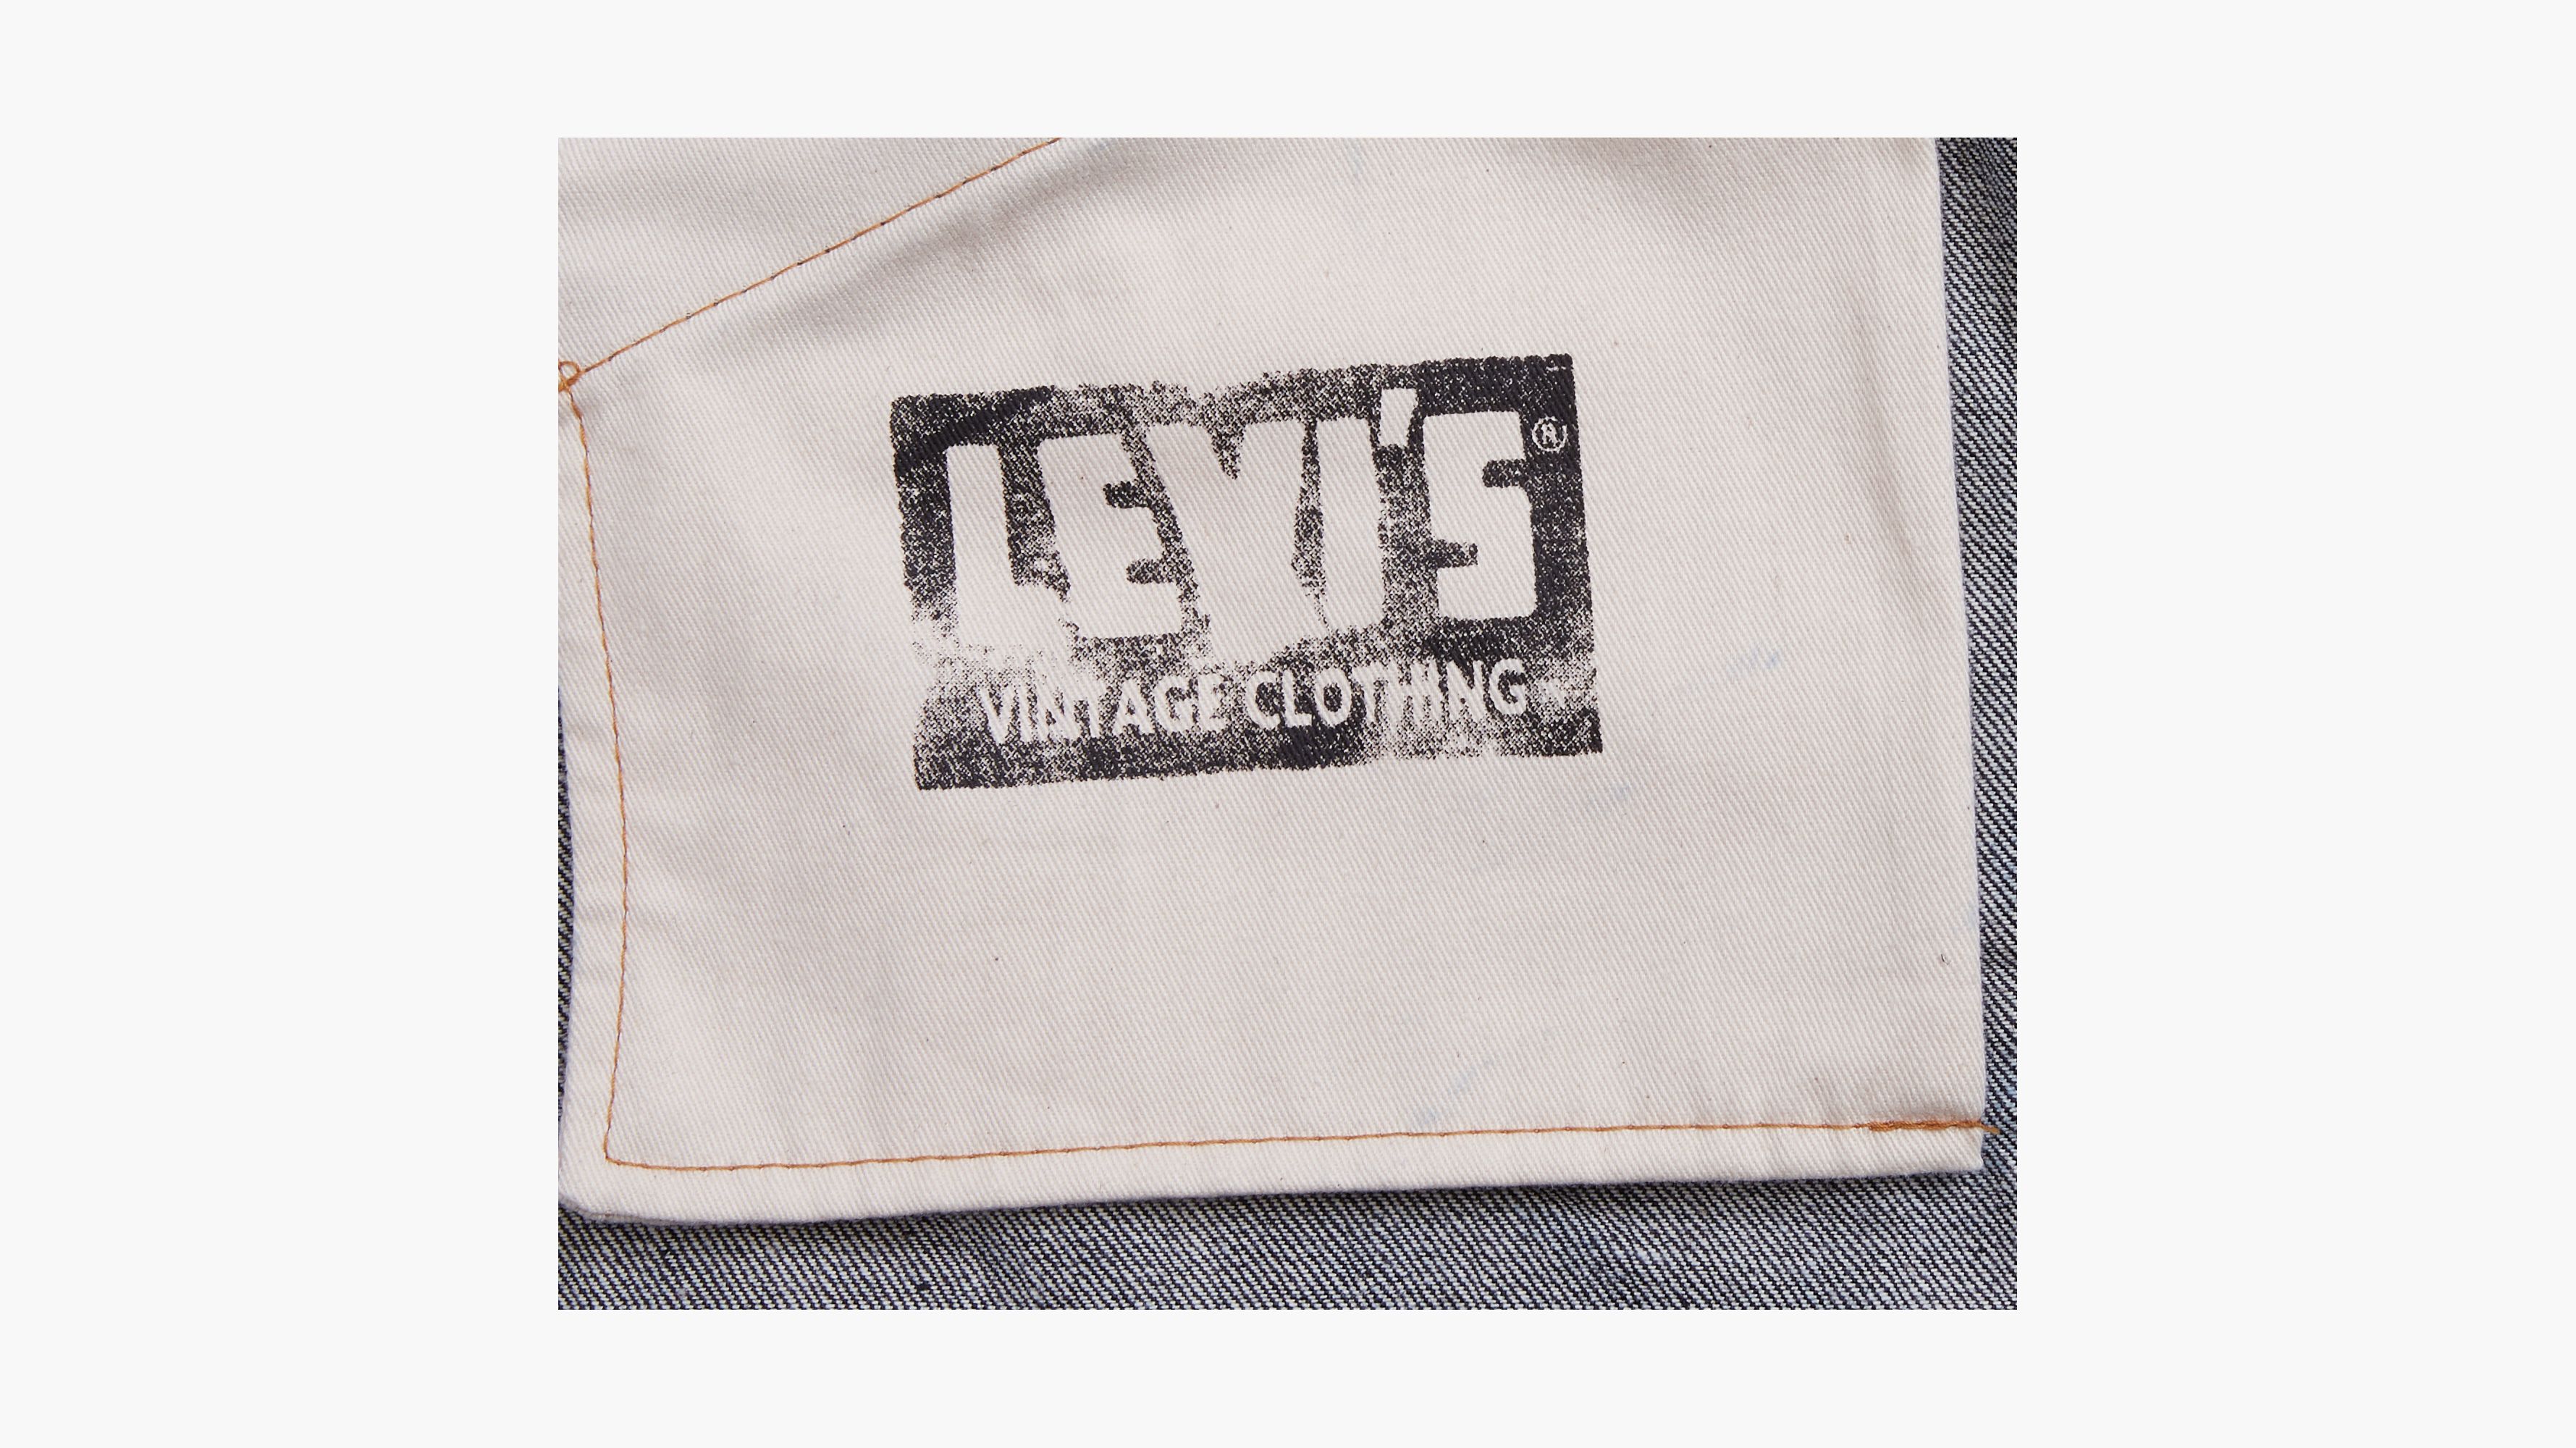 NWT $278 Levis Vintage Clothing 1967 LVC 505 Double Knee Selvedge Jeans 28  X 34